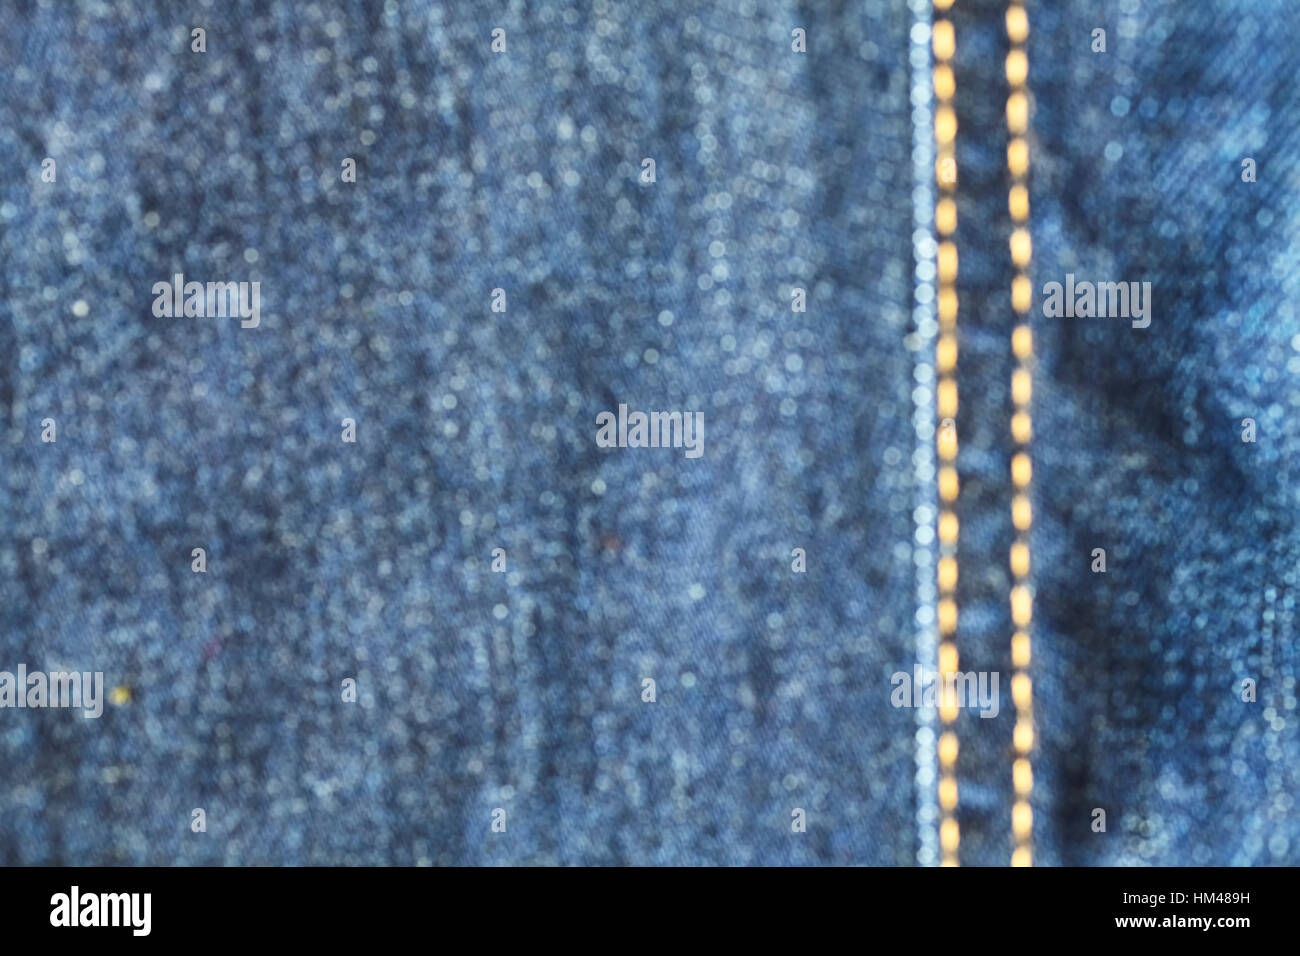 Sfocato close up foto di blue jeans tessuto con cuciture, abstract background. Foto Stock